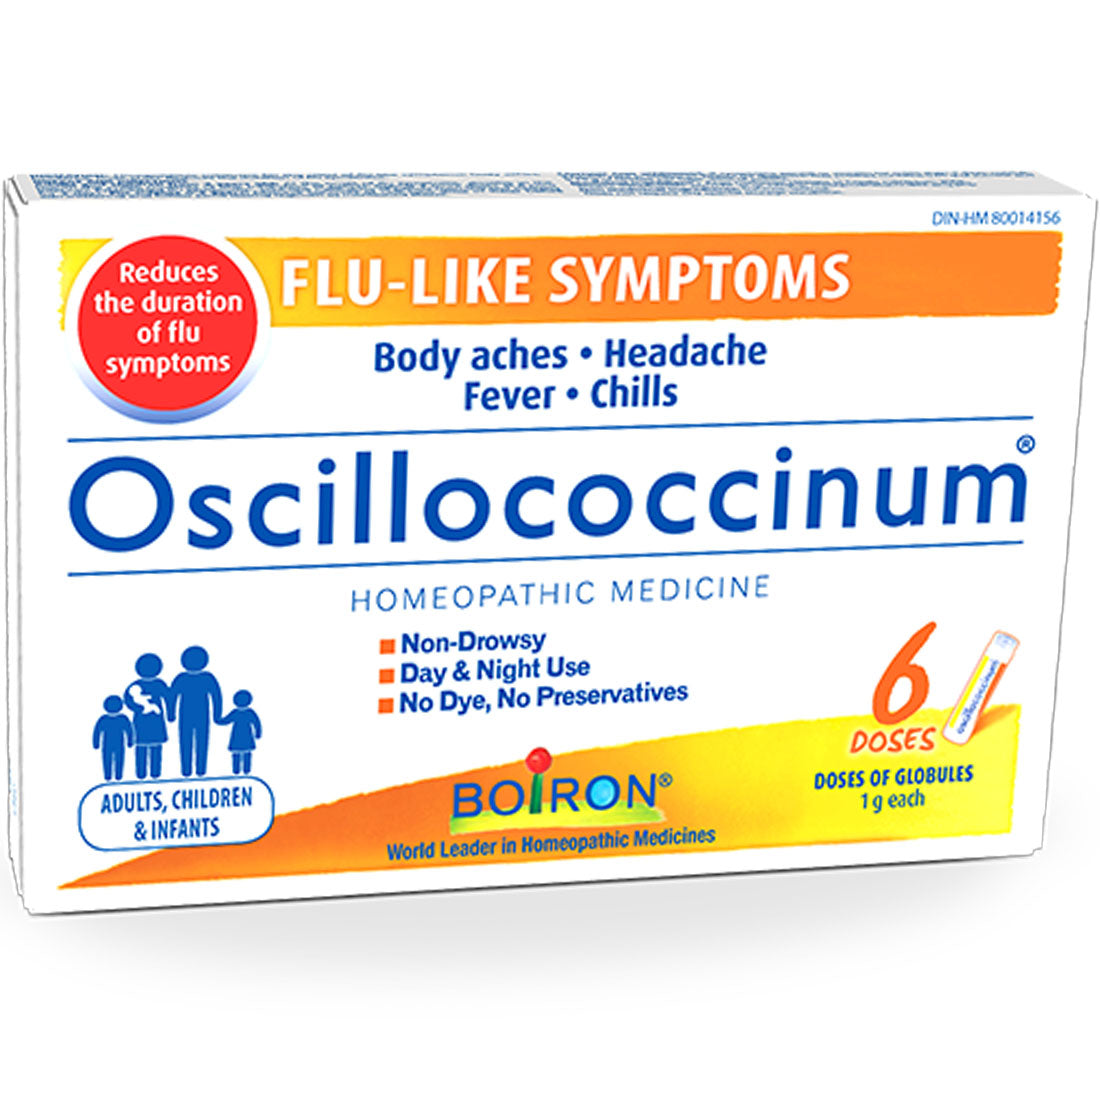 Boiron Oscillococcinum for Flu Symptoms